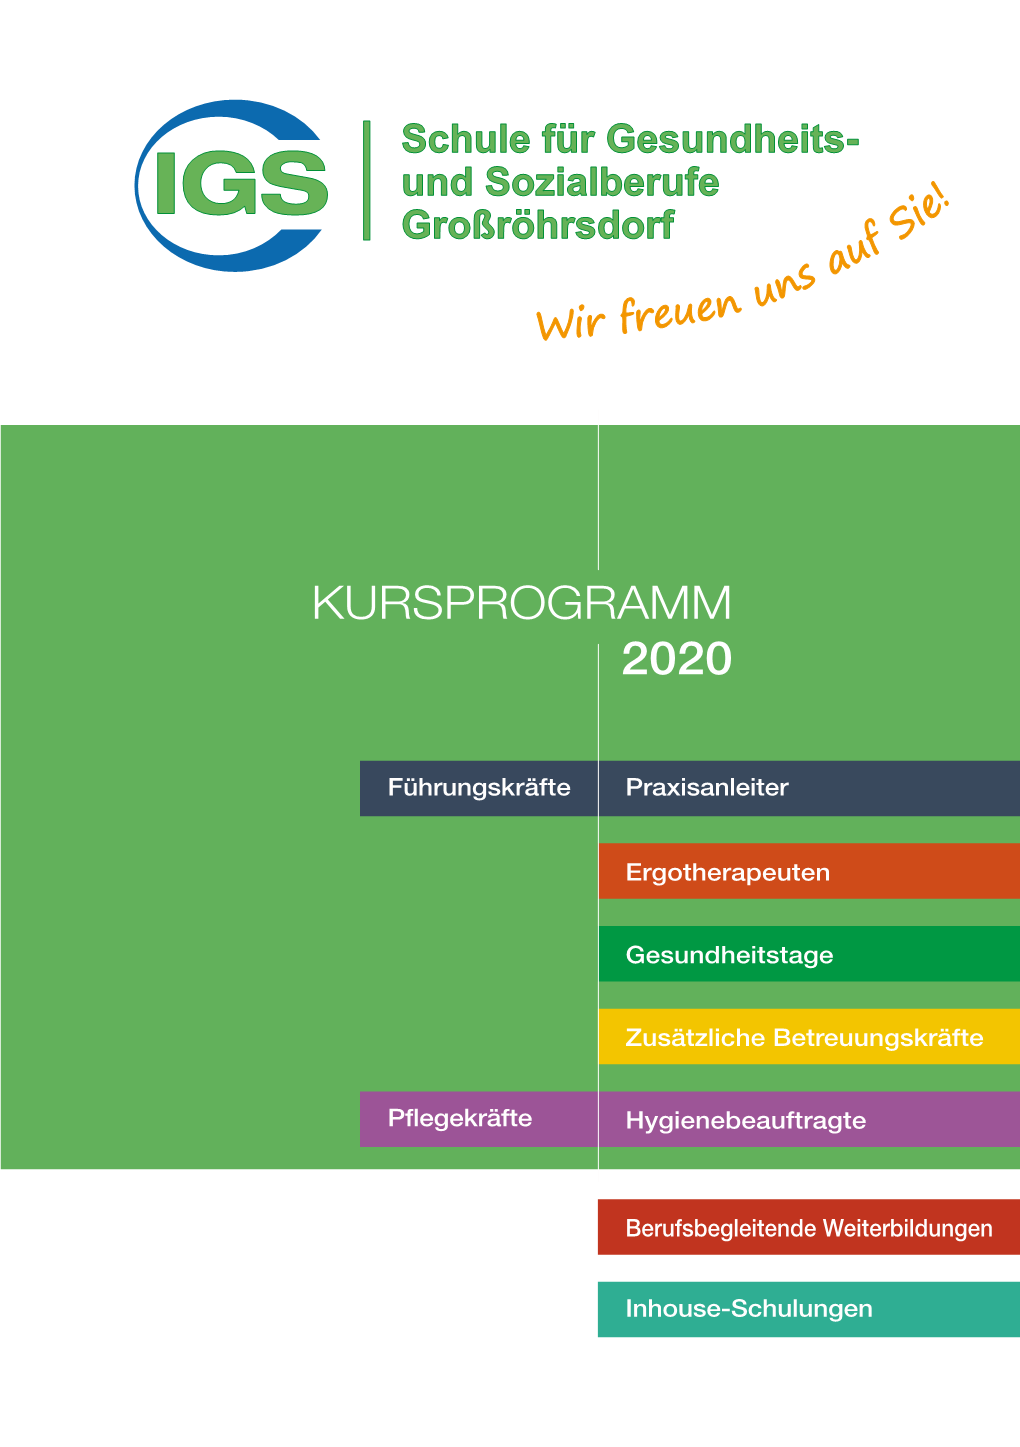 Kursprogramm 2020